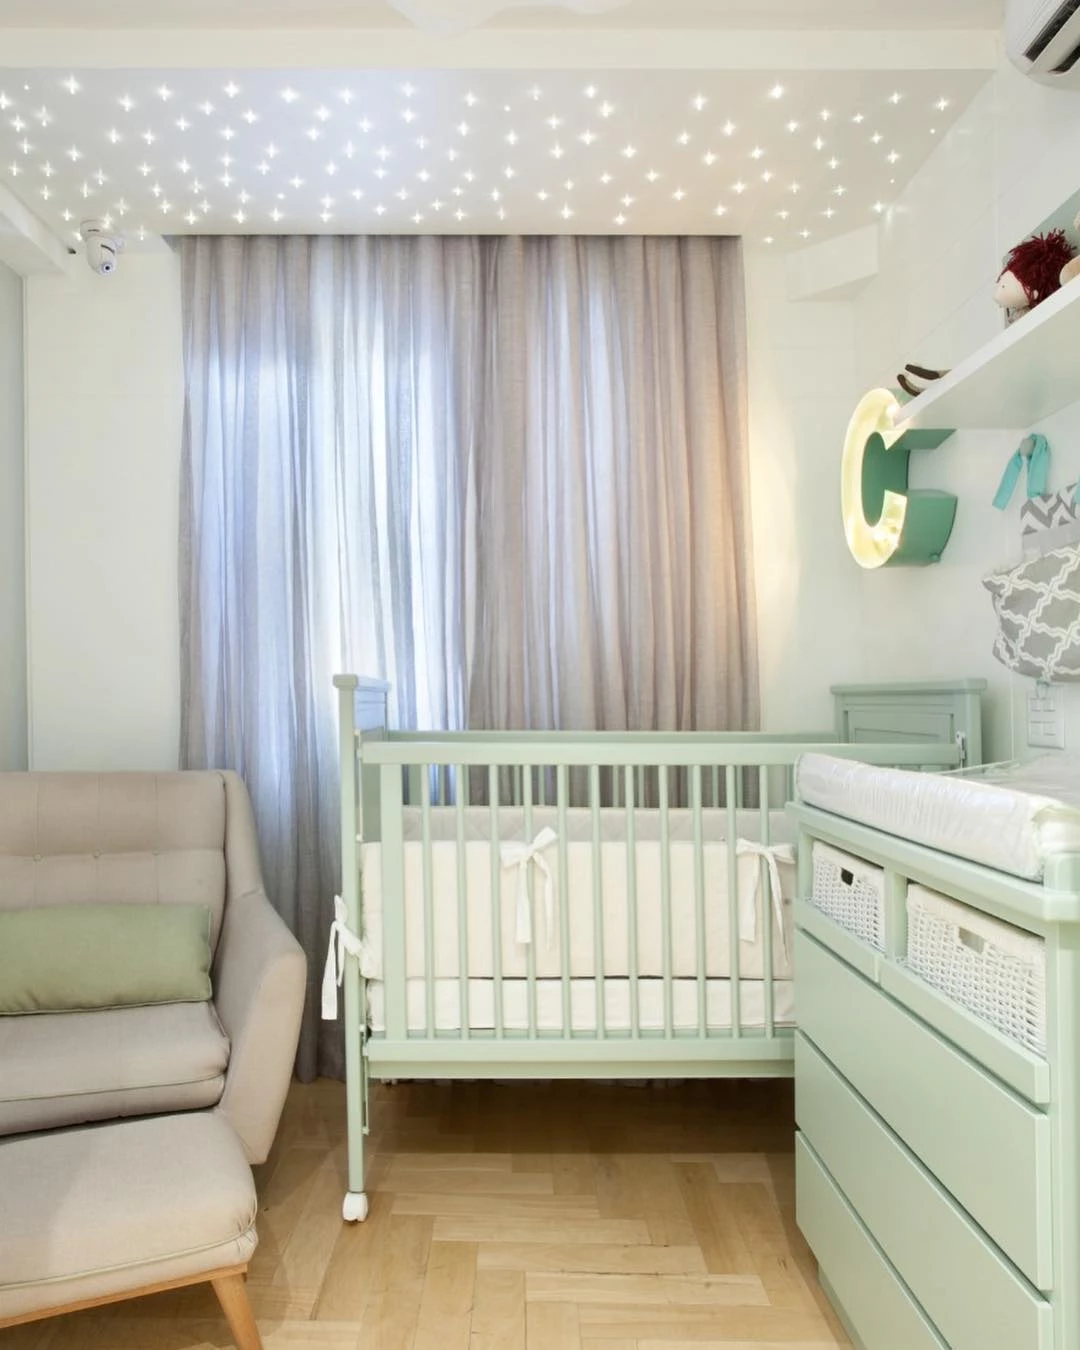 Foto de cortina para quarto de bebe 4 - 4